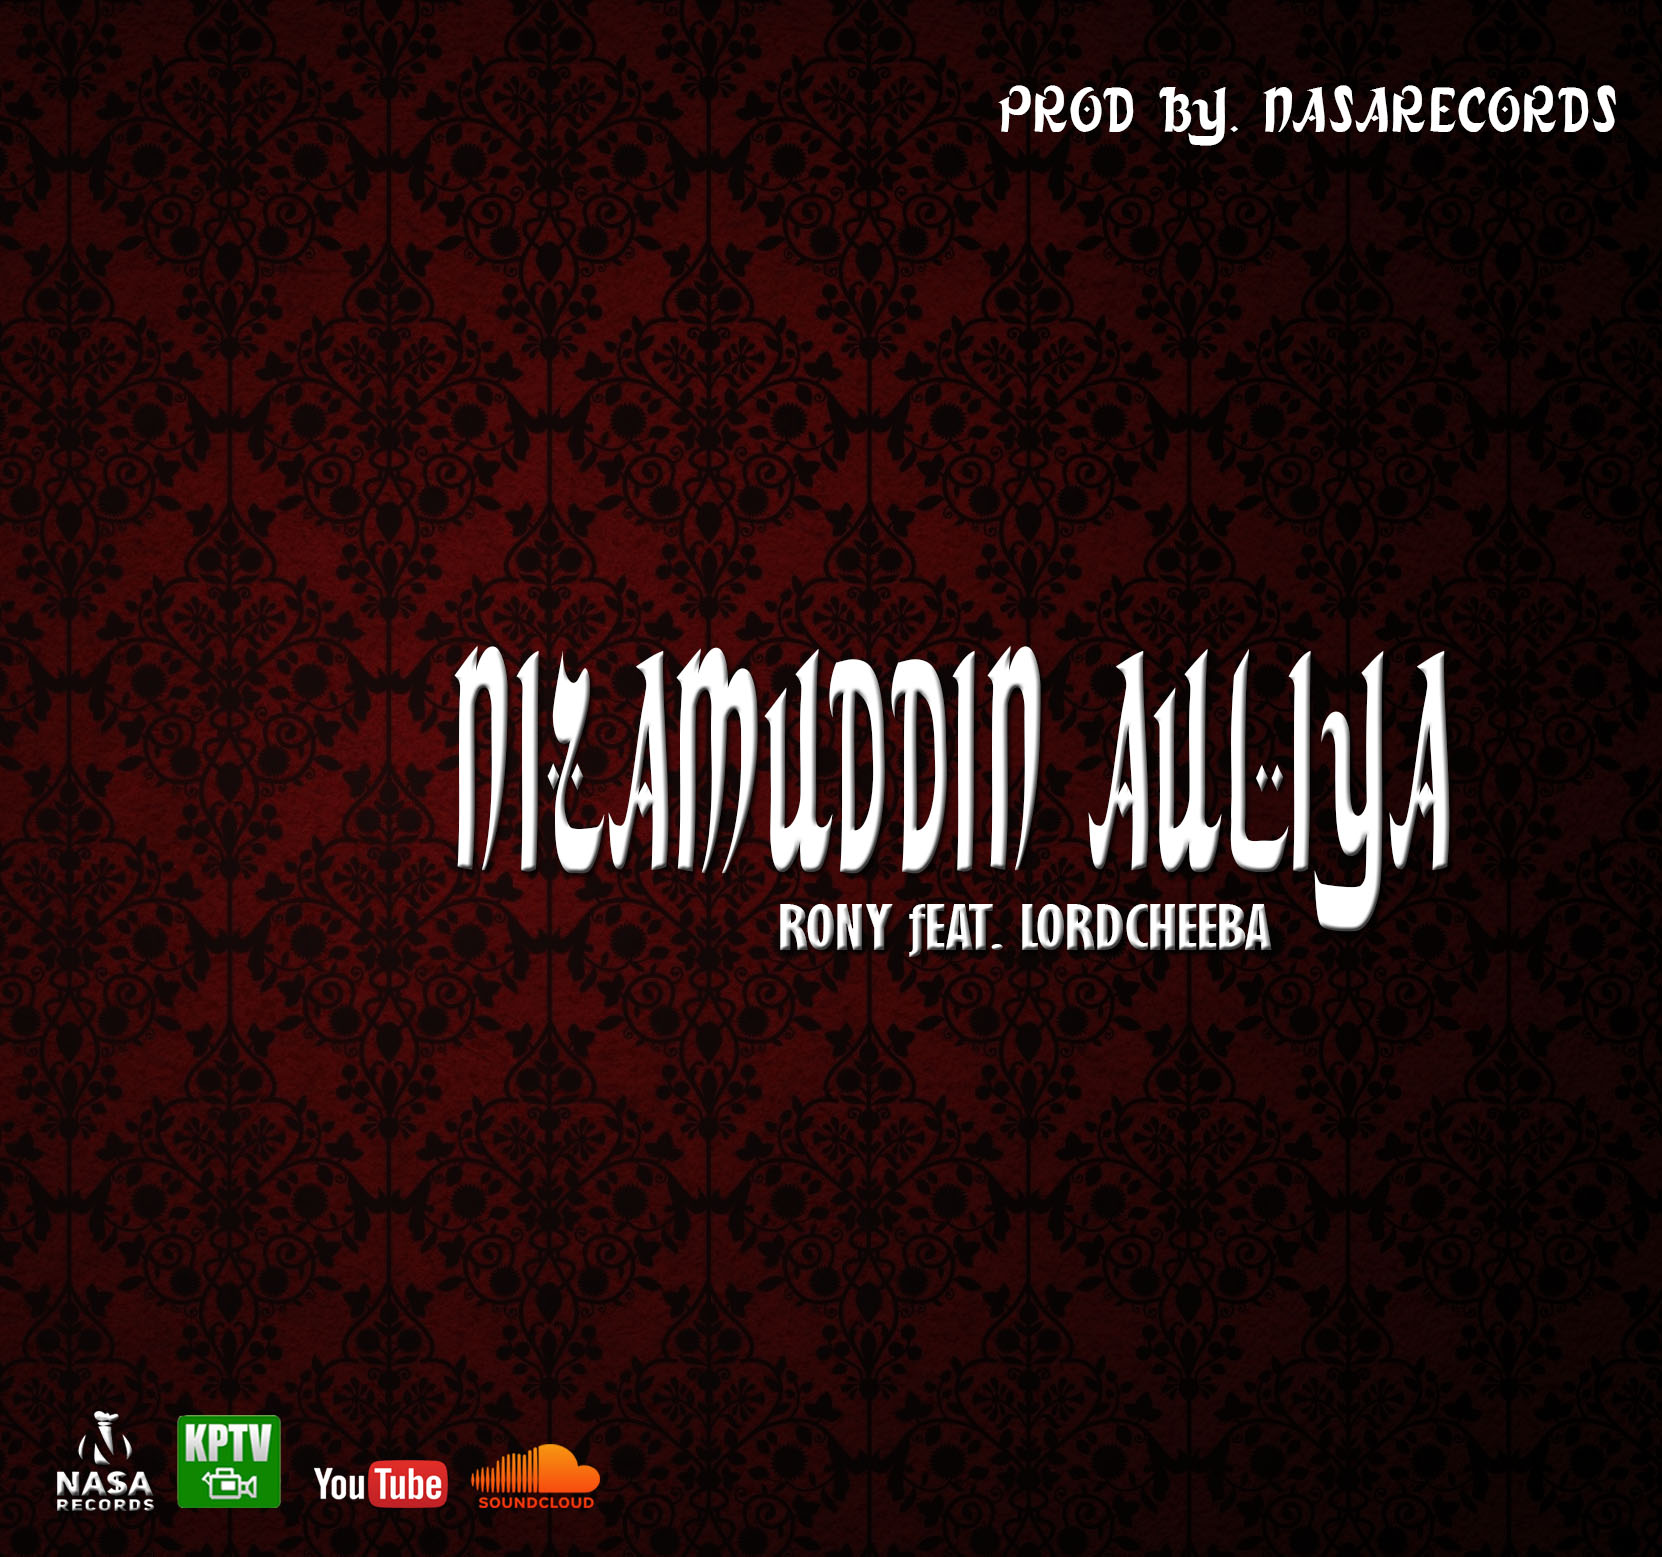 Lord Cheeba - Nizamuddin Auliya feat. Rony - Nasa Records